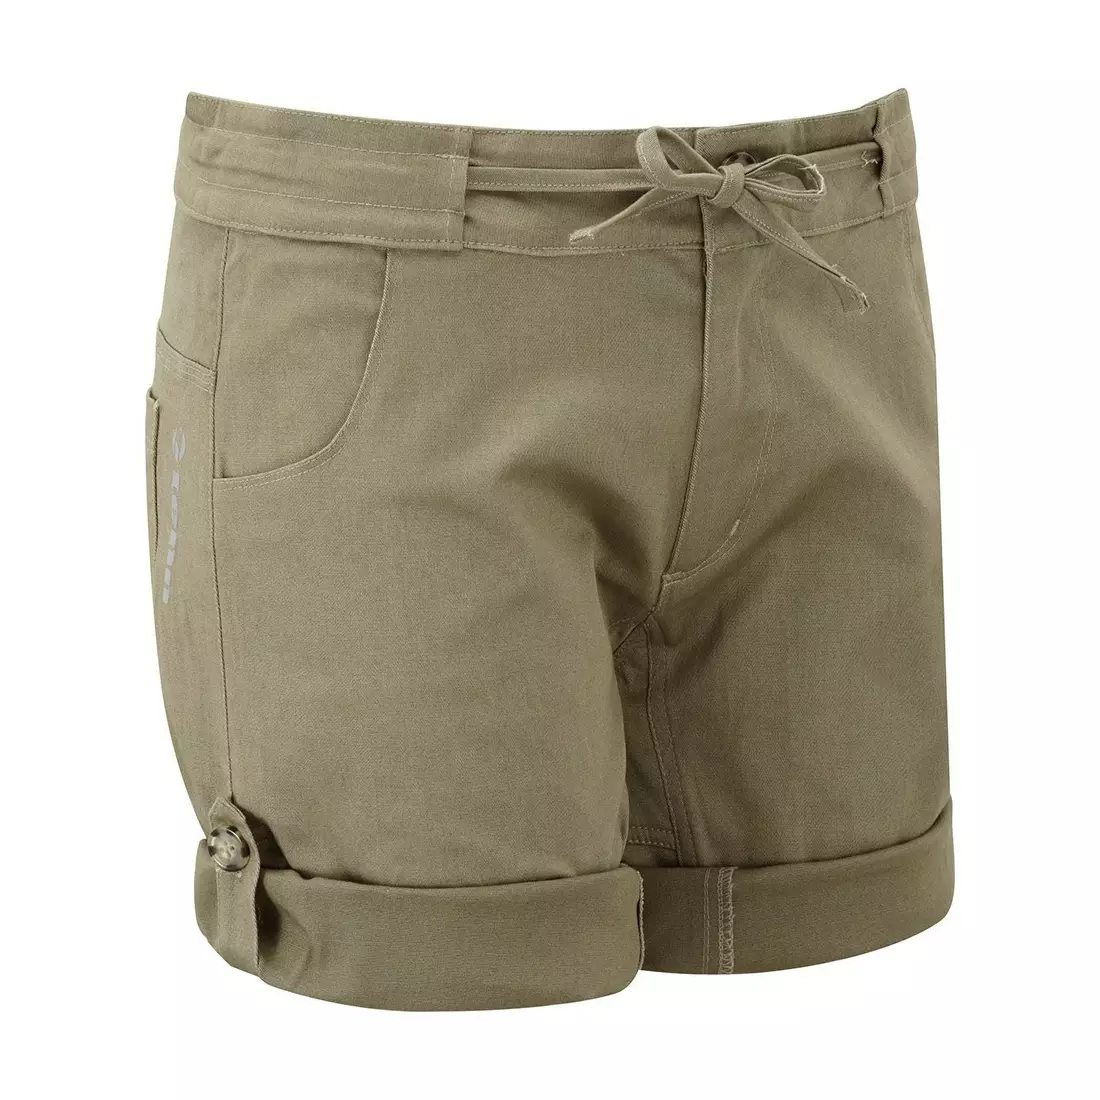 TENN OUTDOORS Damen CARGO-Shorts, Farbe: Khaki